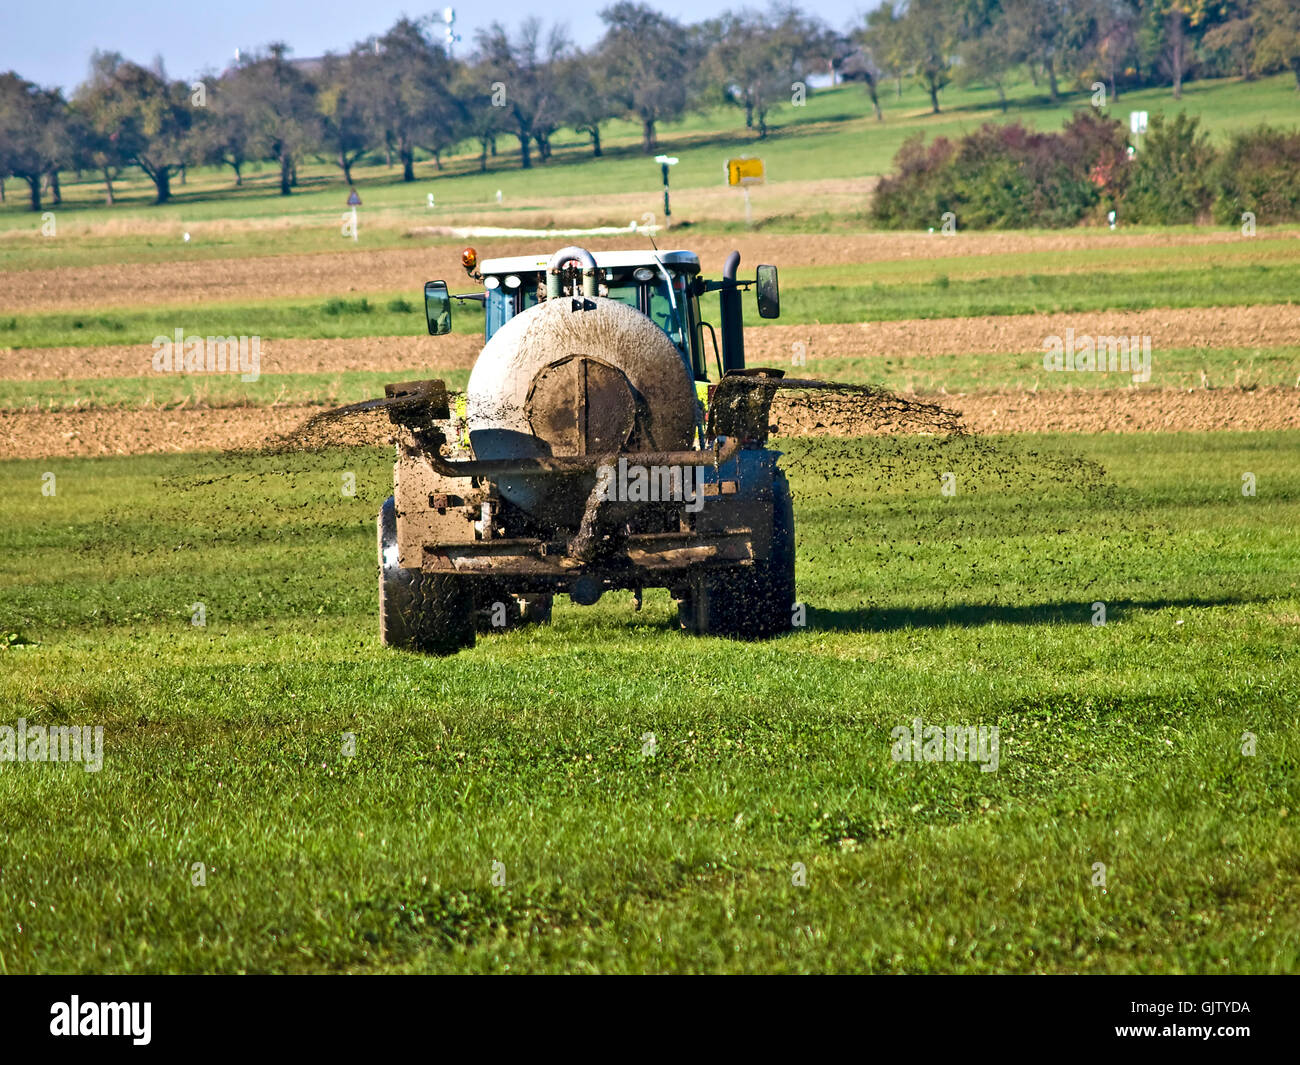 Tracteur fertiliser groundswell Banque D'Images